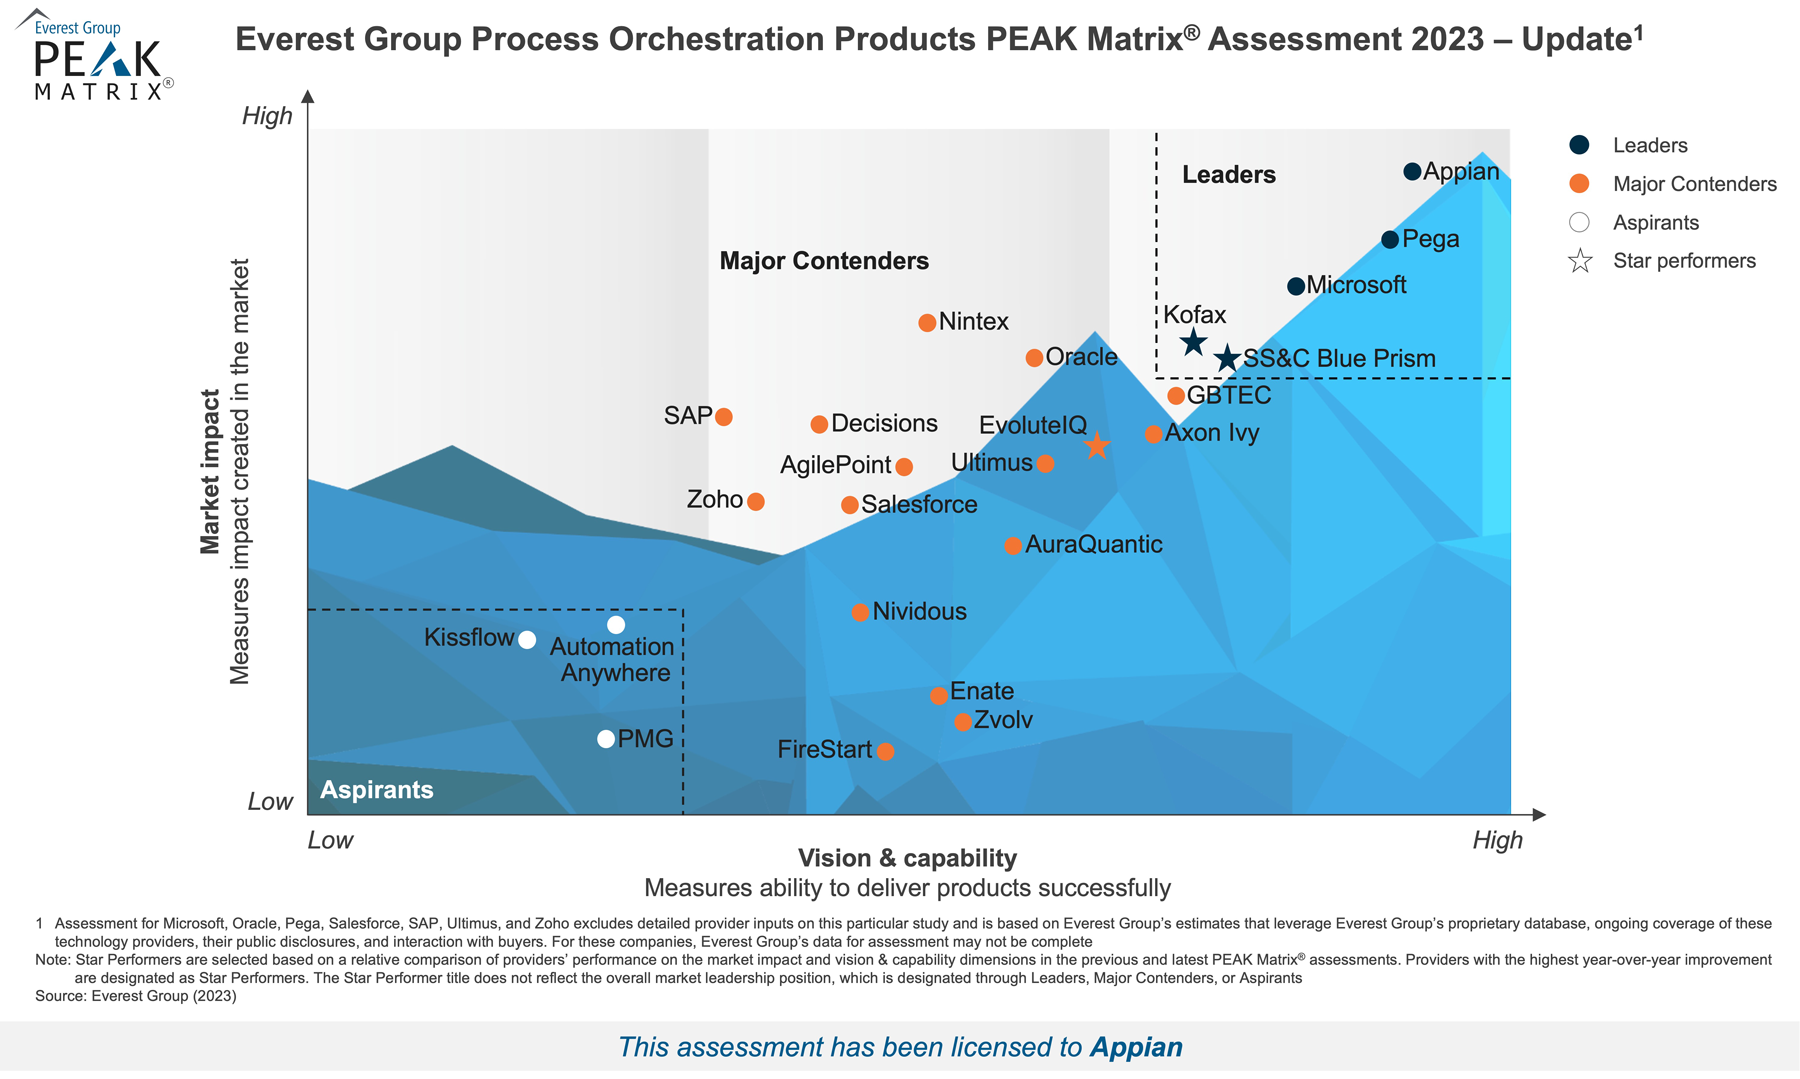 Everest Group PEAK Matrix process orchestration 2023